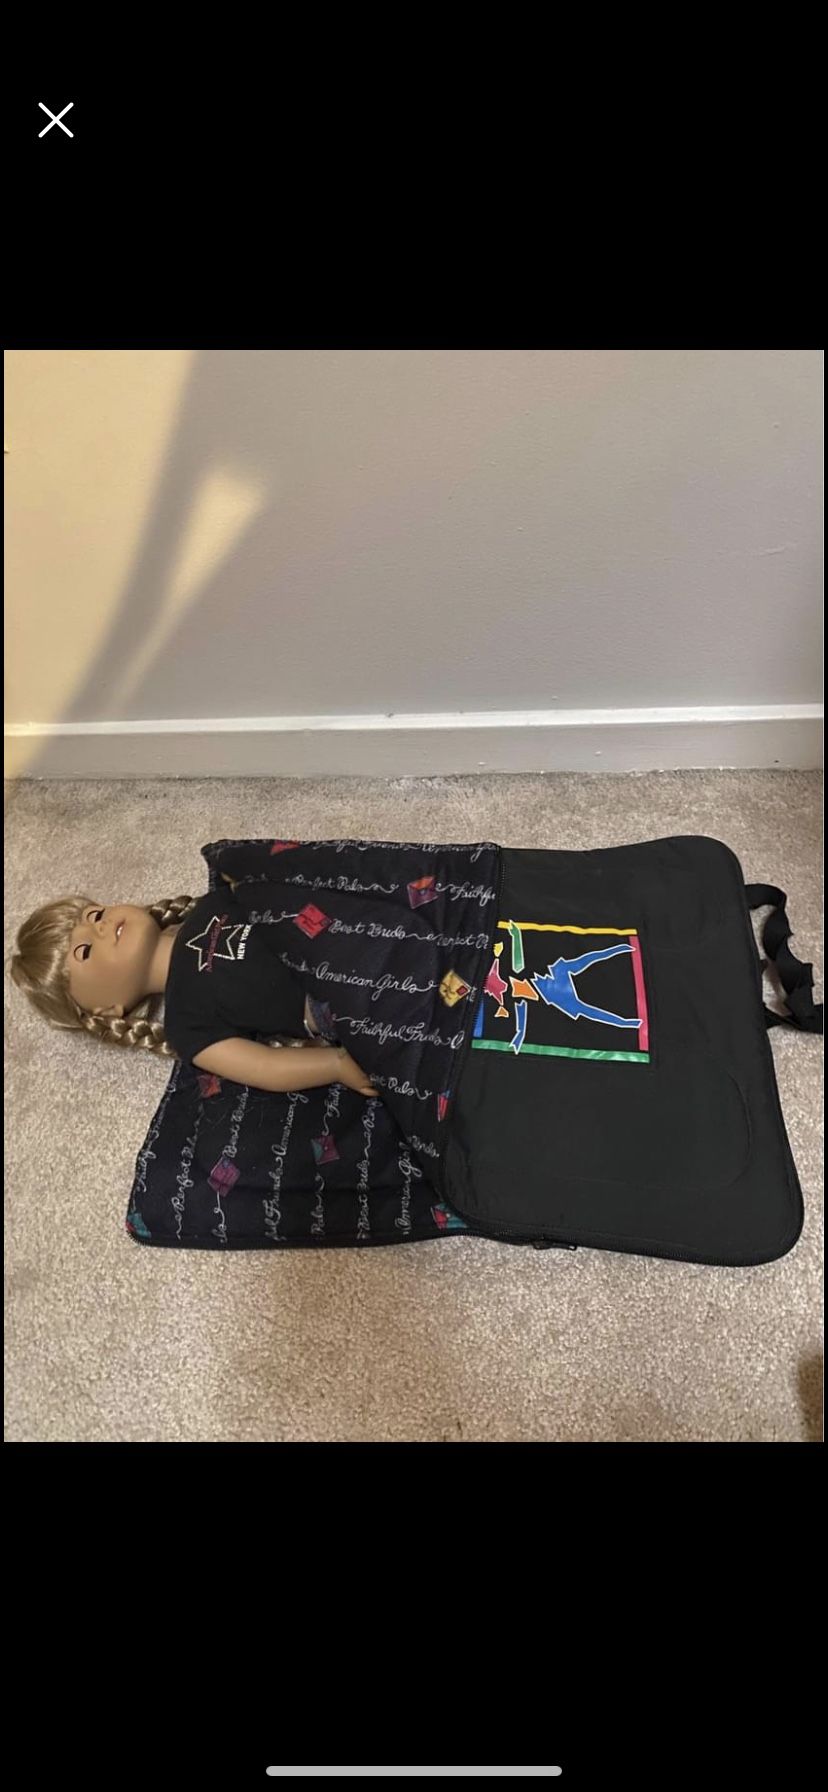 American girl doll sleeping bag